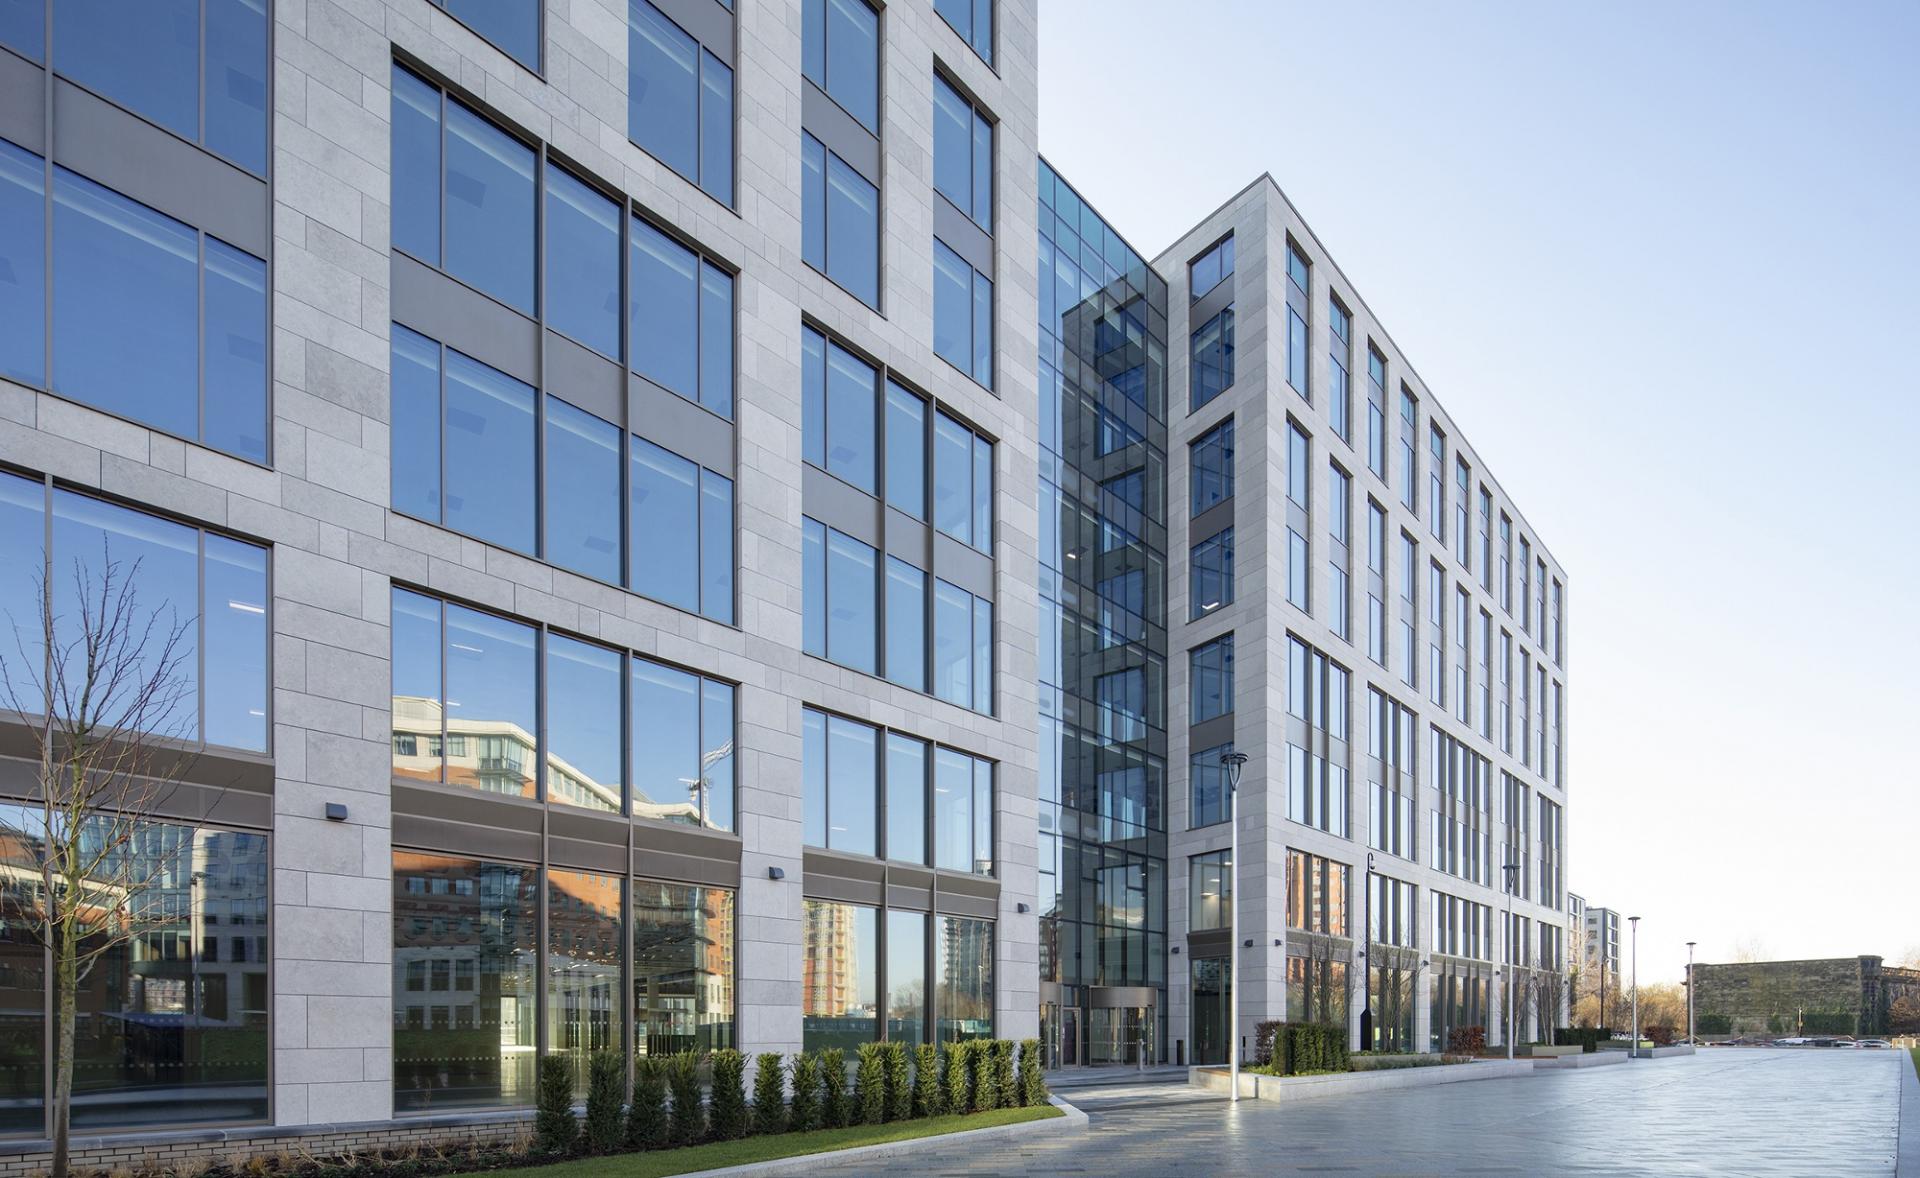 Administrators exploring sale of £18m-turnover building façade firm